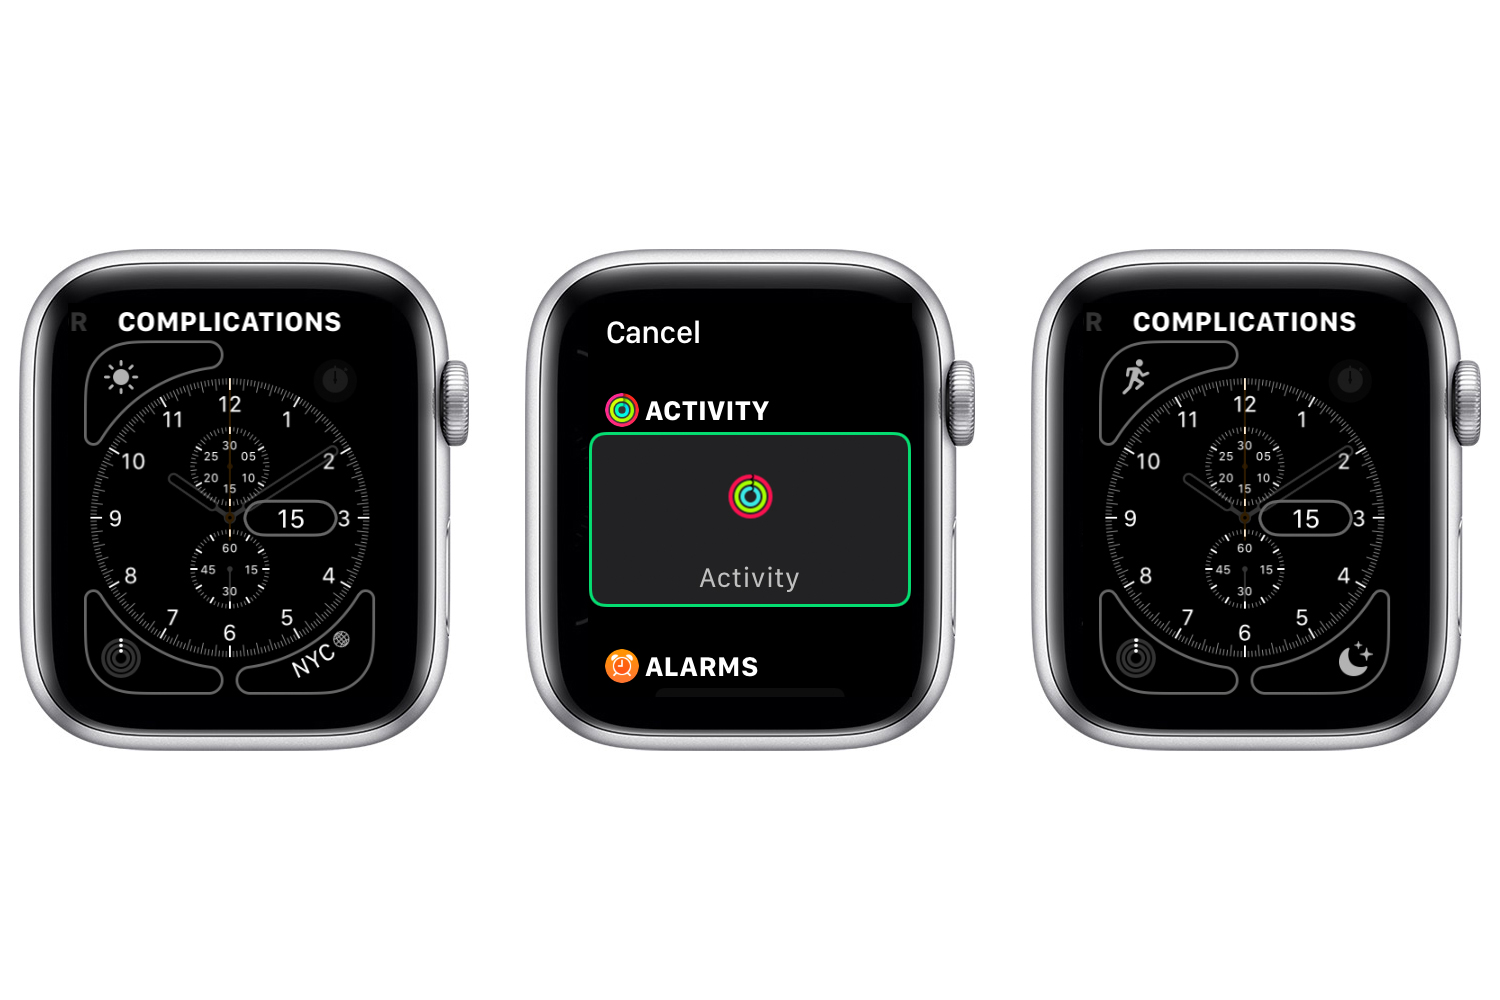 Apple Watch complications.